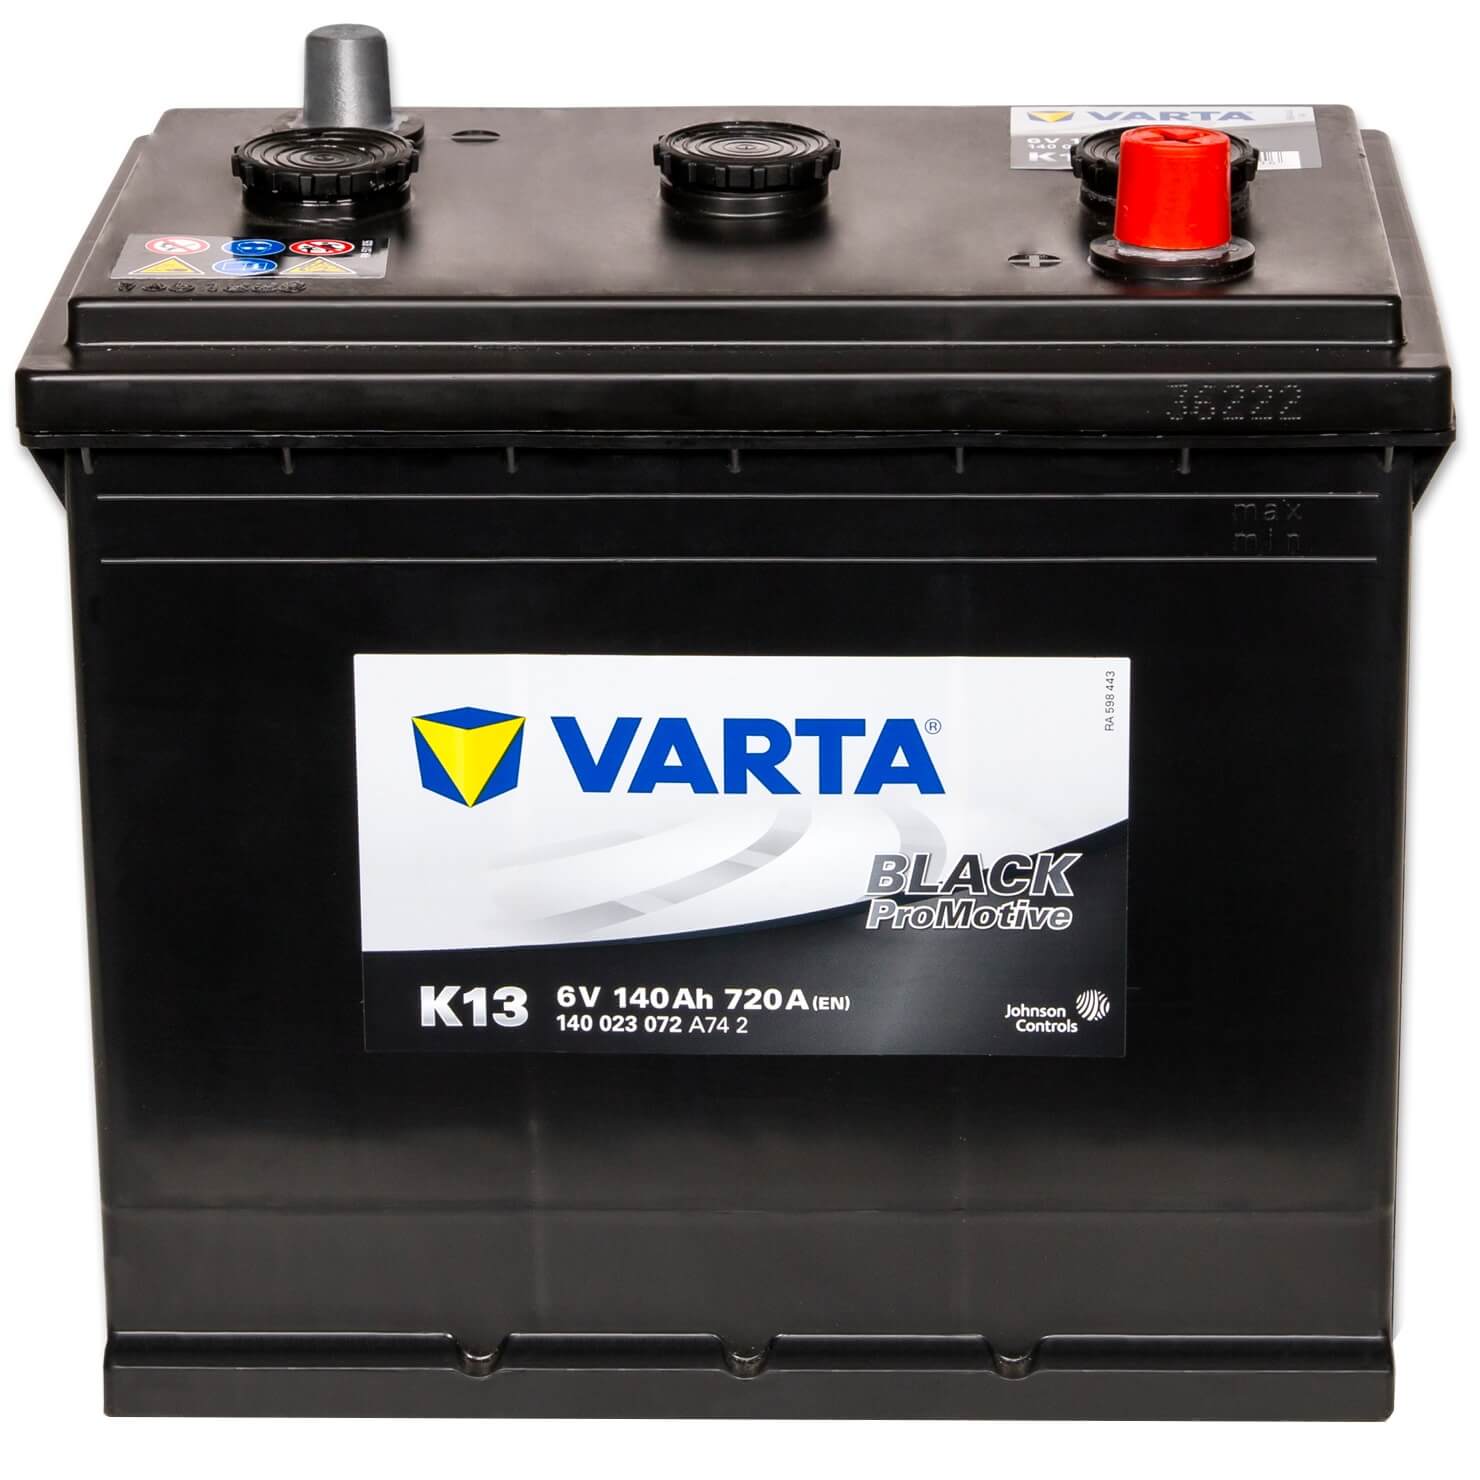 Varta K13 Promotive Black 6V 140Ah 720A/EN